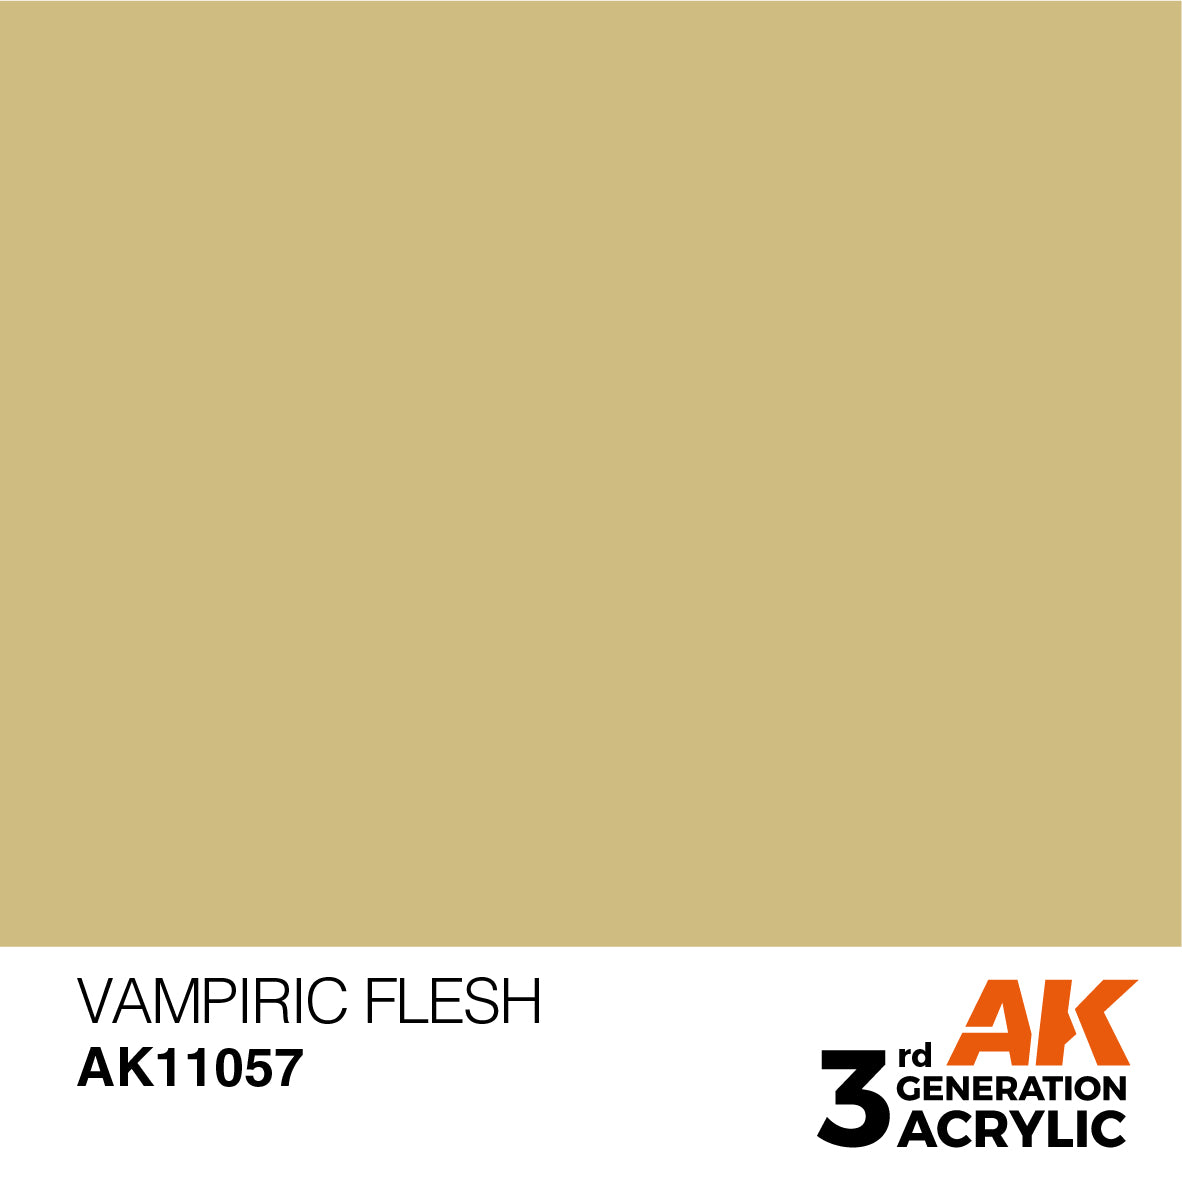 AK11057 Vampiric Flesh